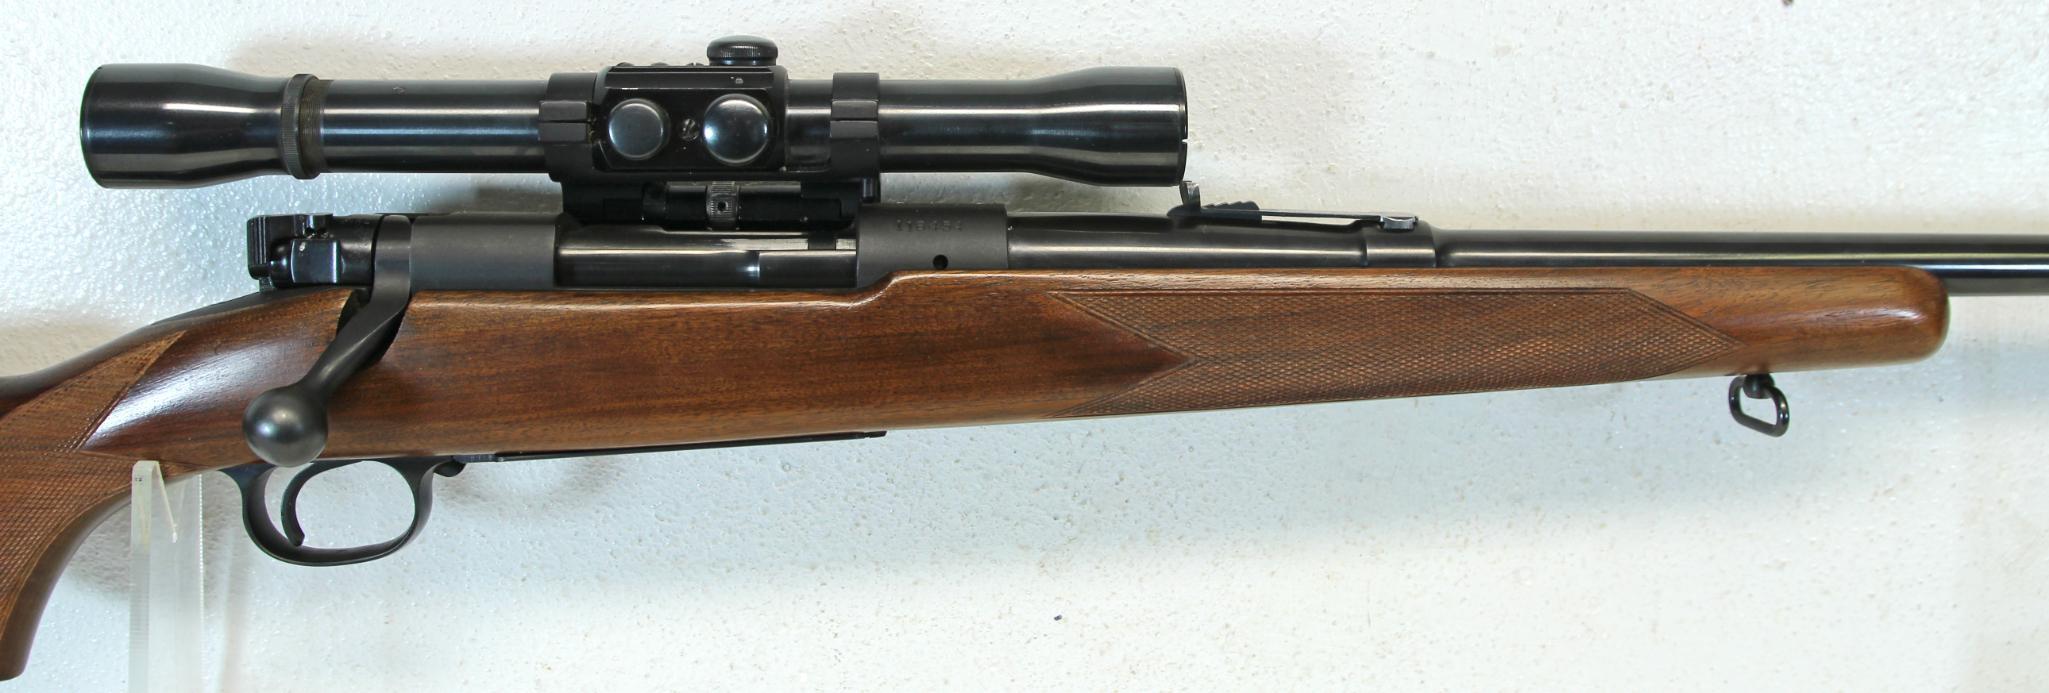 Winchester Pre-64 Model 70 .30 Gov't...06 Bolt Action Rifle w/Weaver KV Side Mount Scope Very Nice